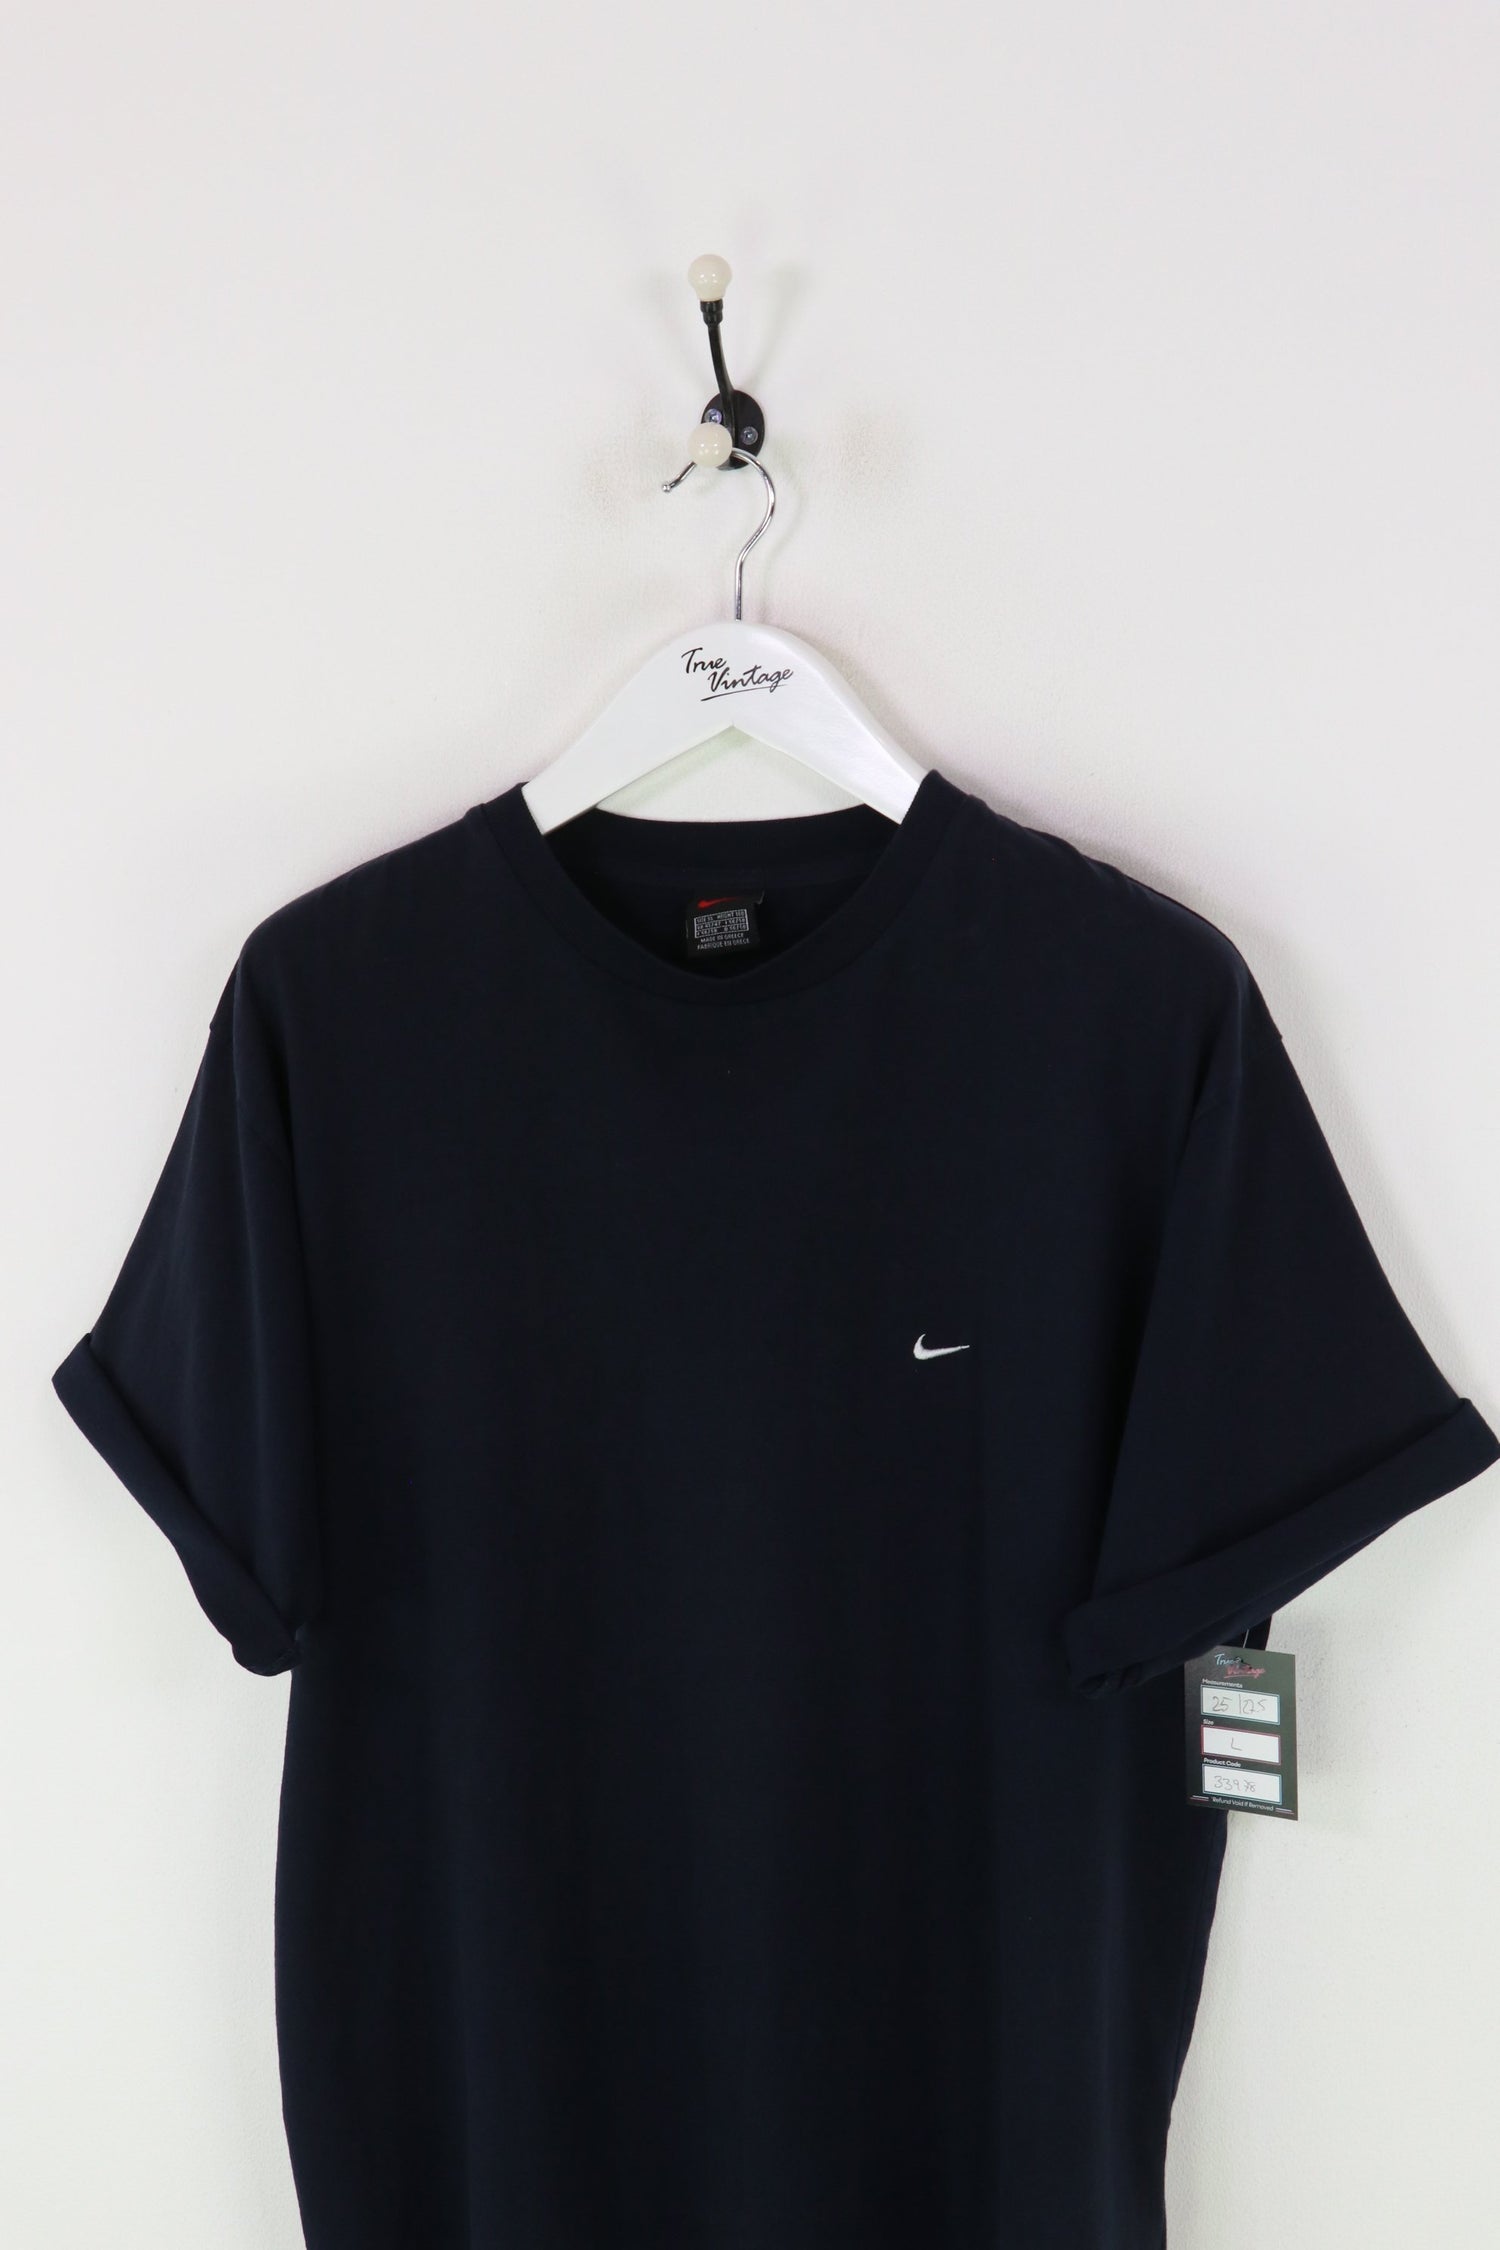 Nike T-shirt Navy Large